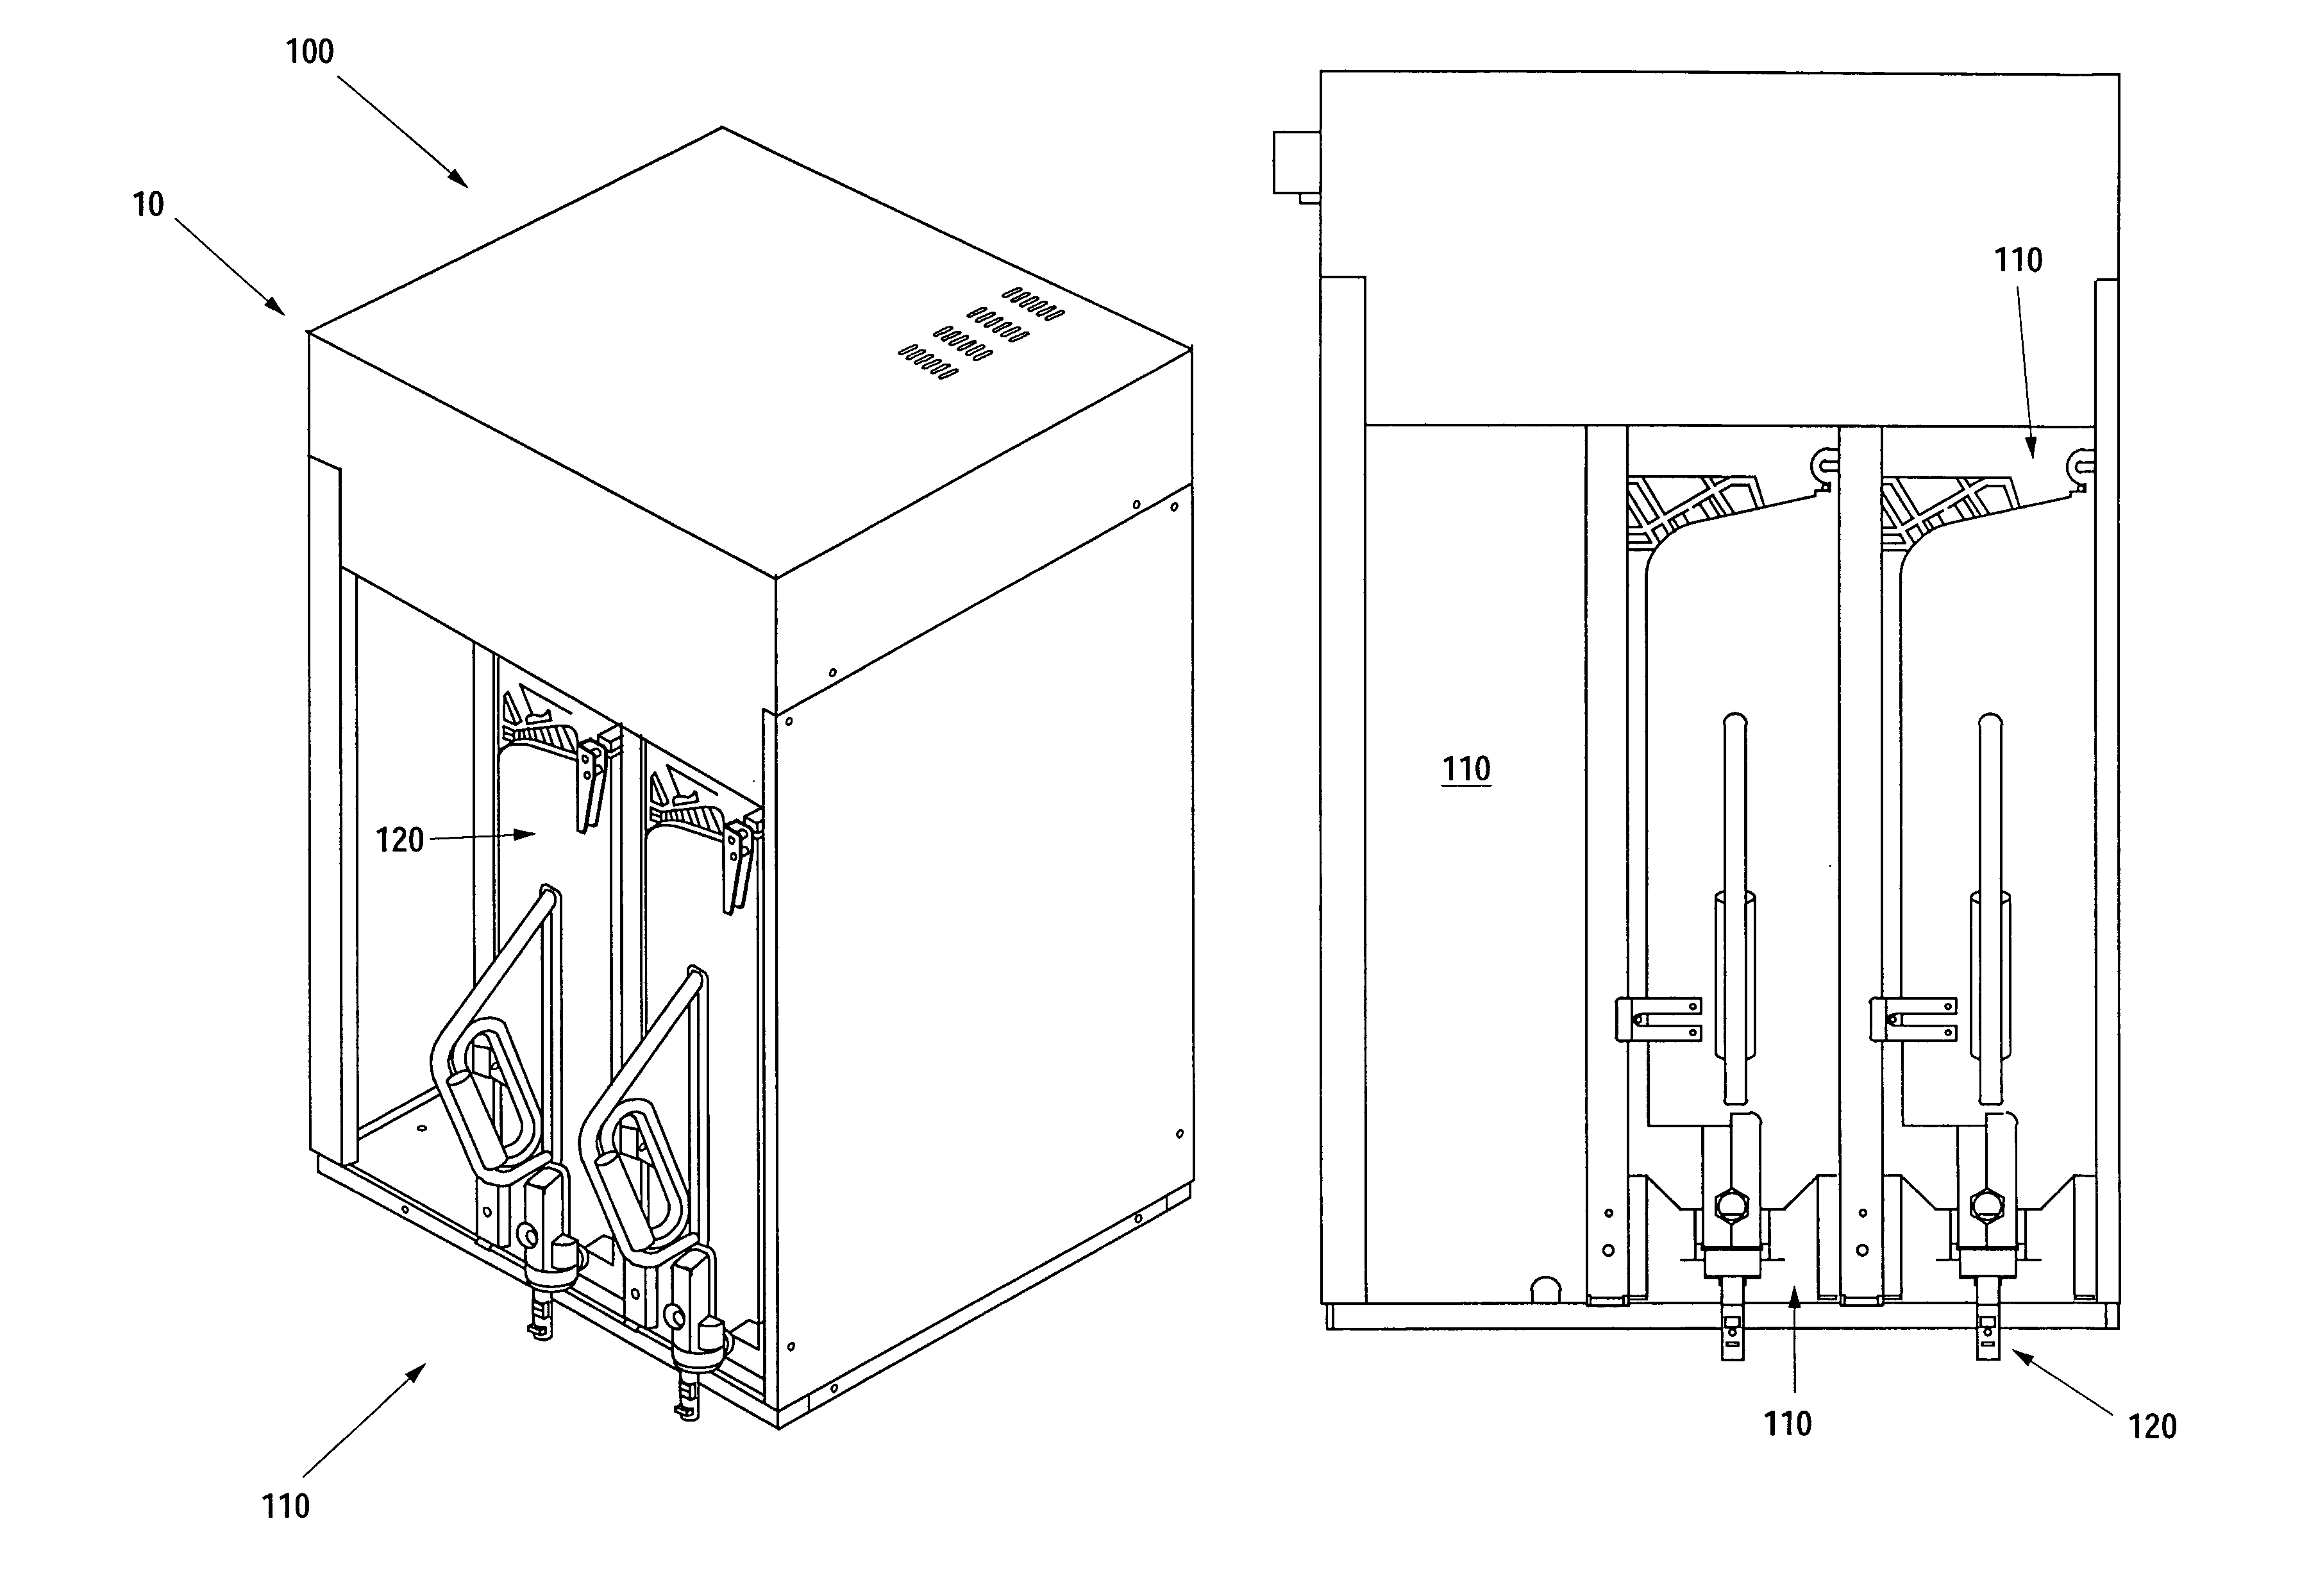 Method of calibrating a dispensing station